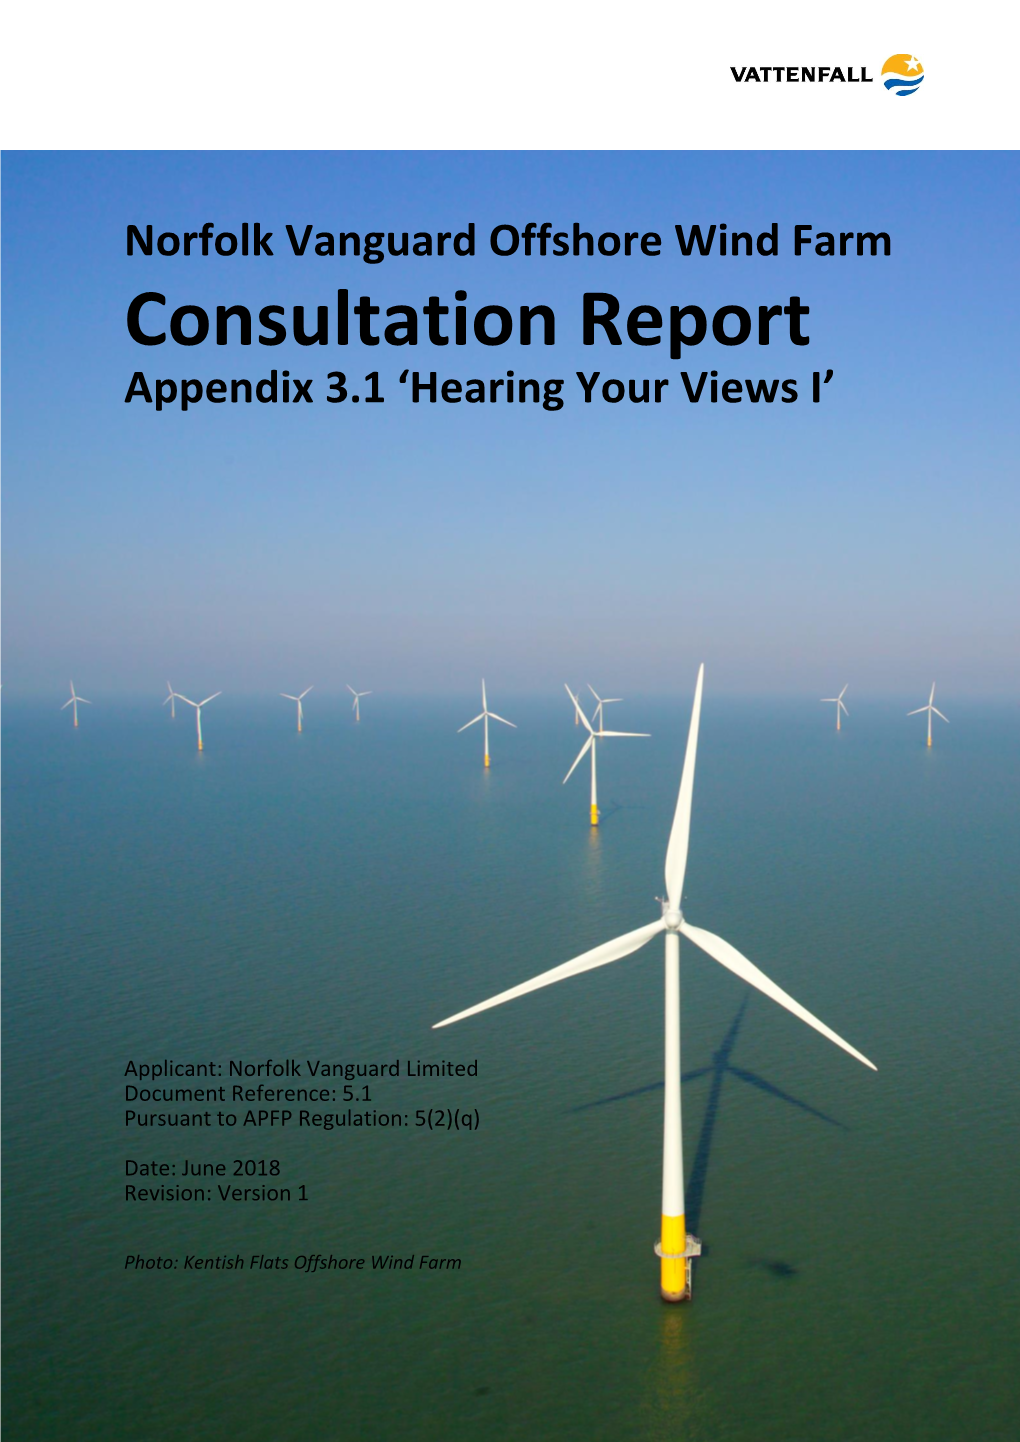 Norfolk Vanguard Offshore Wind Farm Consultation Report Appendix 3.1 ‘Hearing Your Views I’